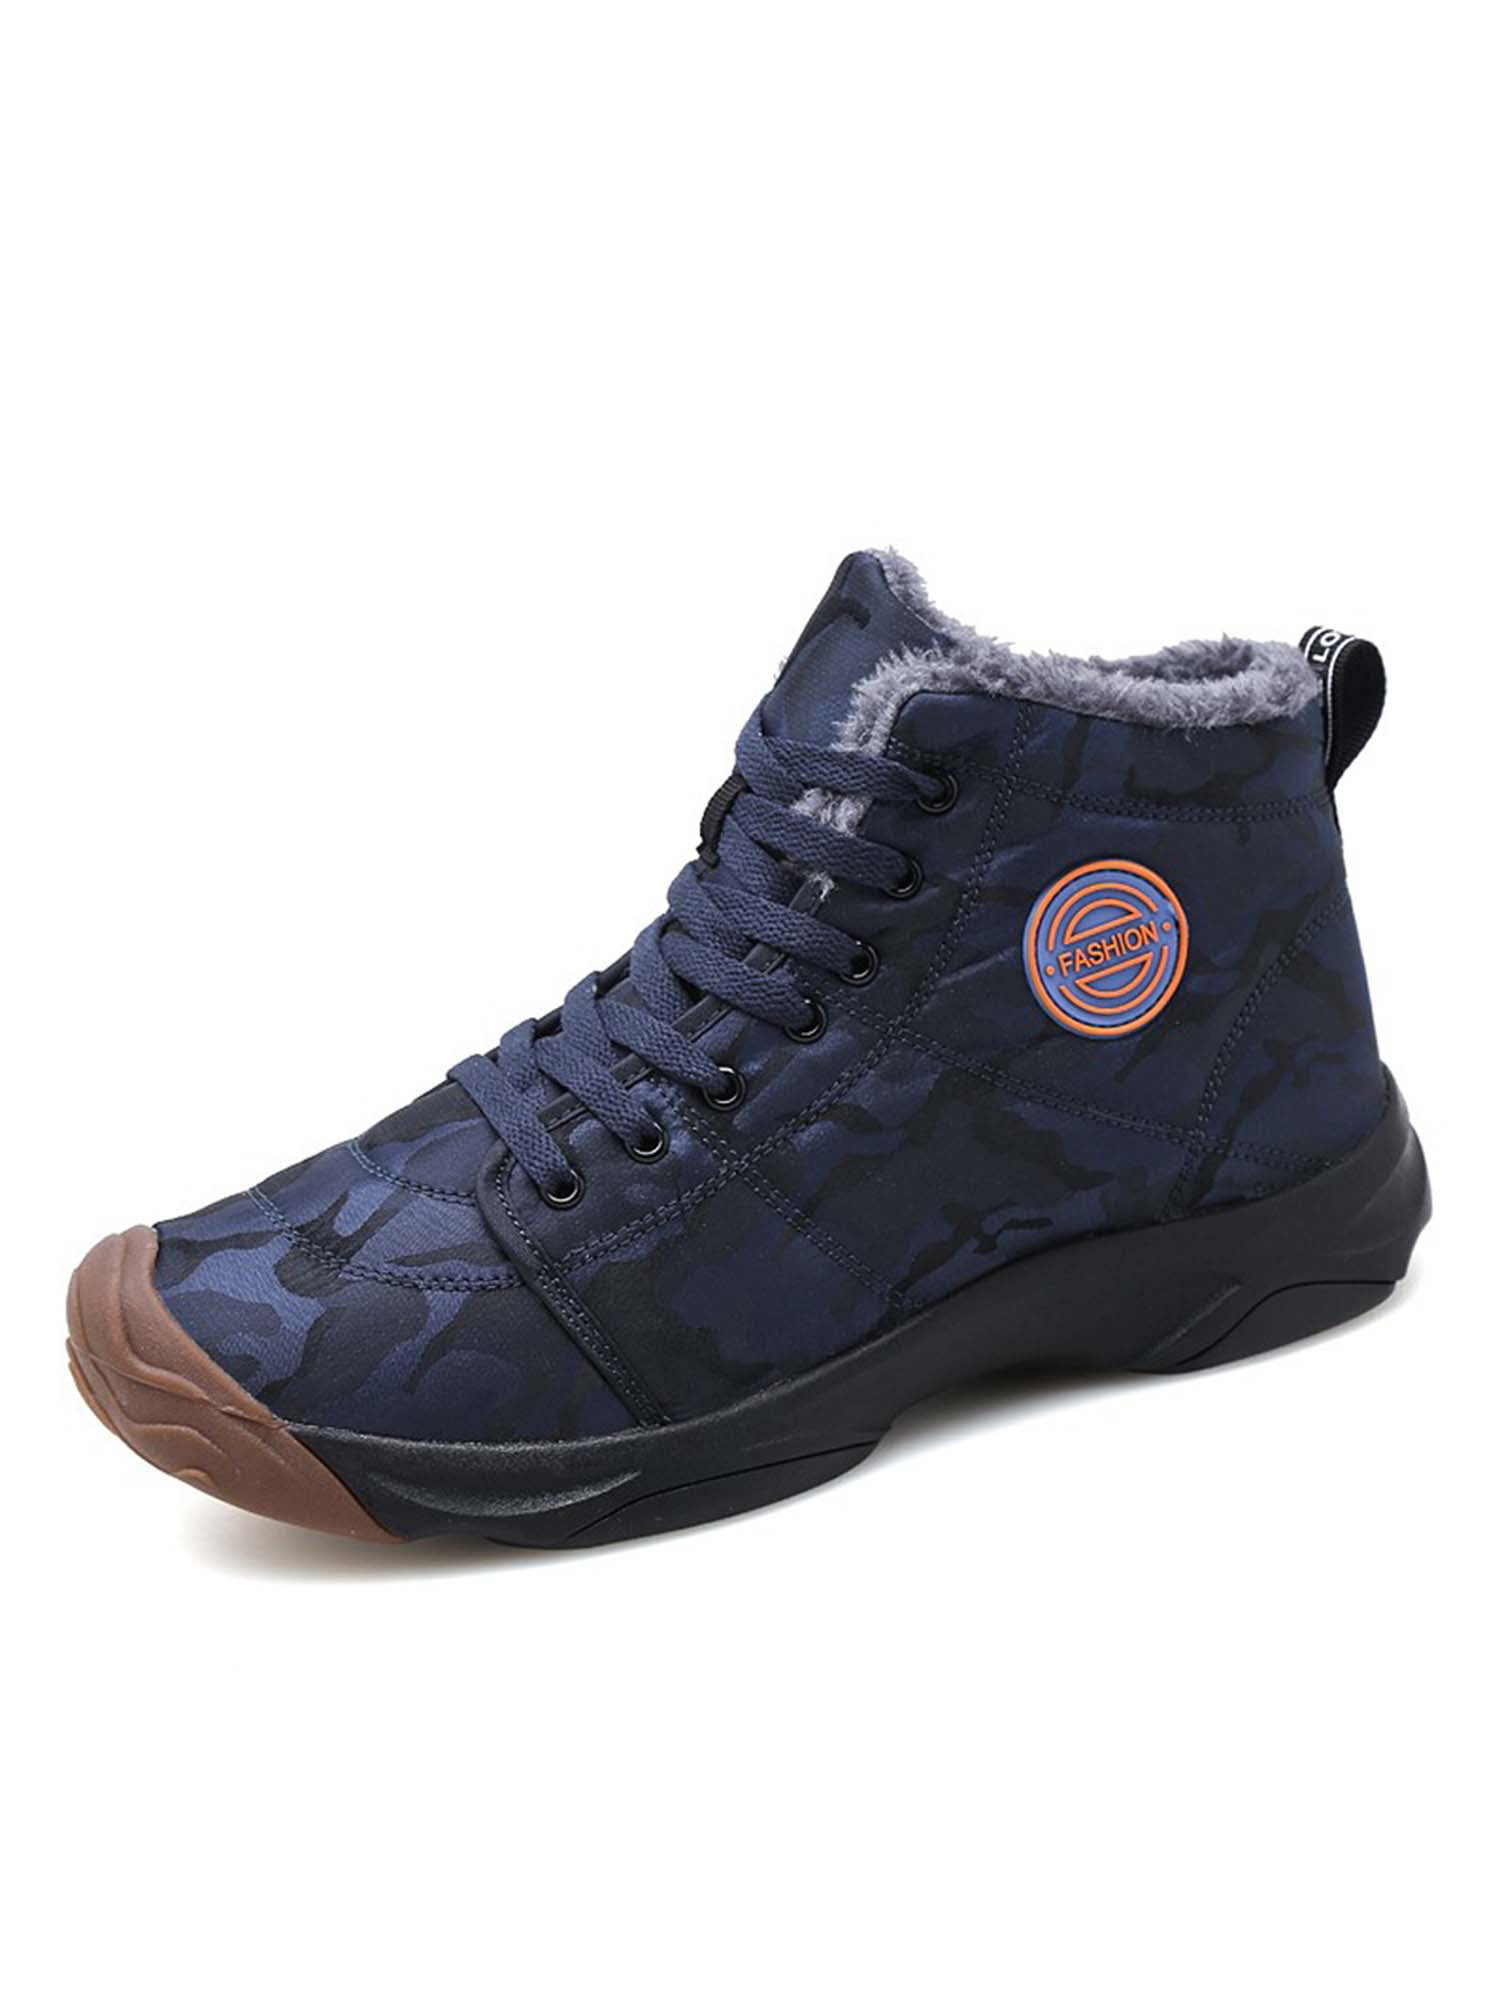 Sloggers 2841BL07 Size 7 Women's Blue Rain & Garden Ankle Boots 